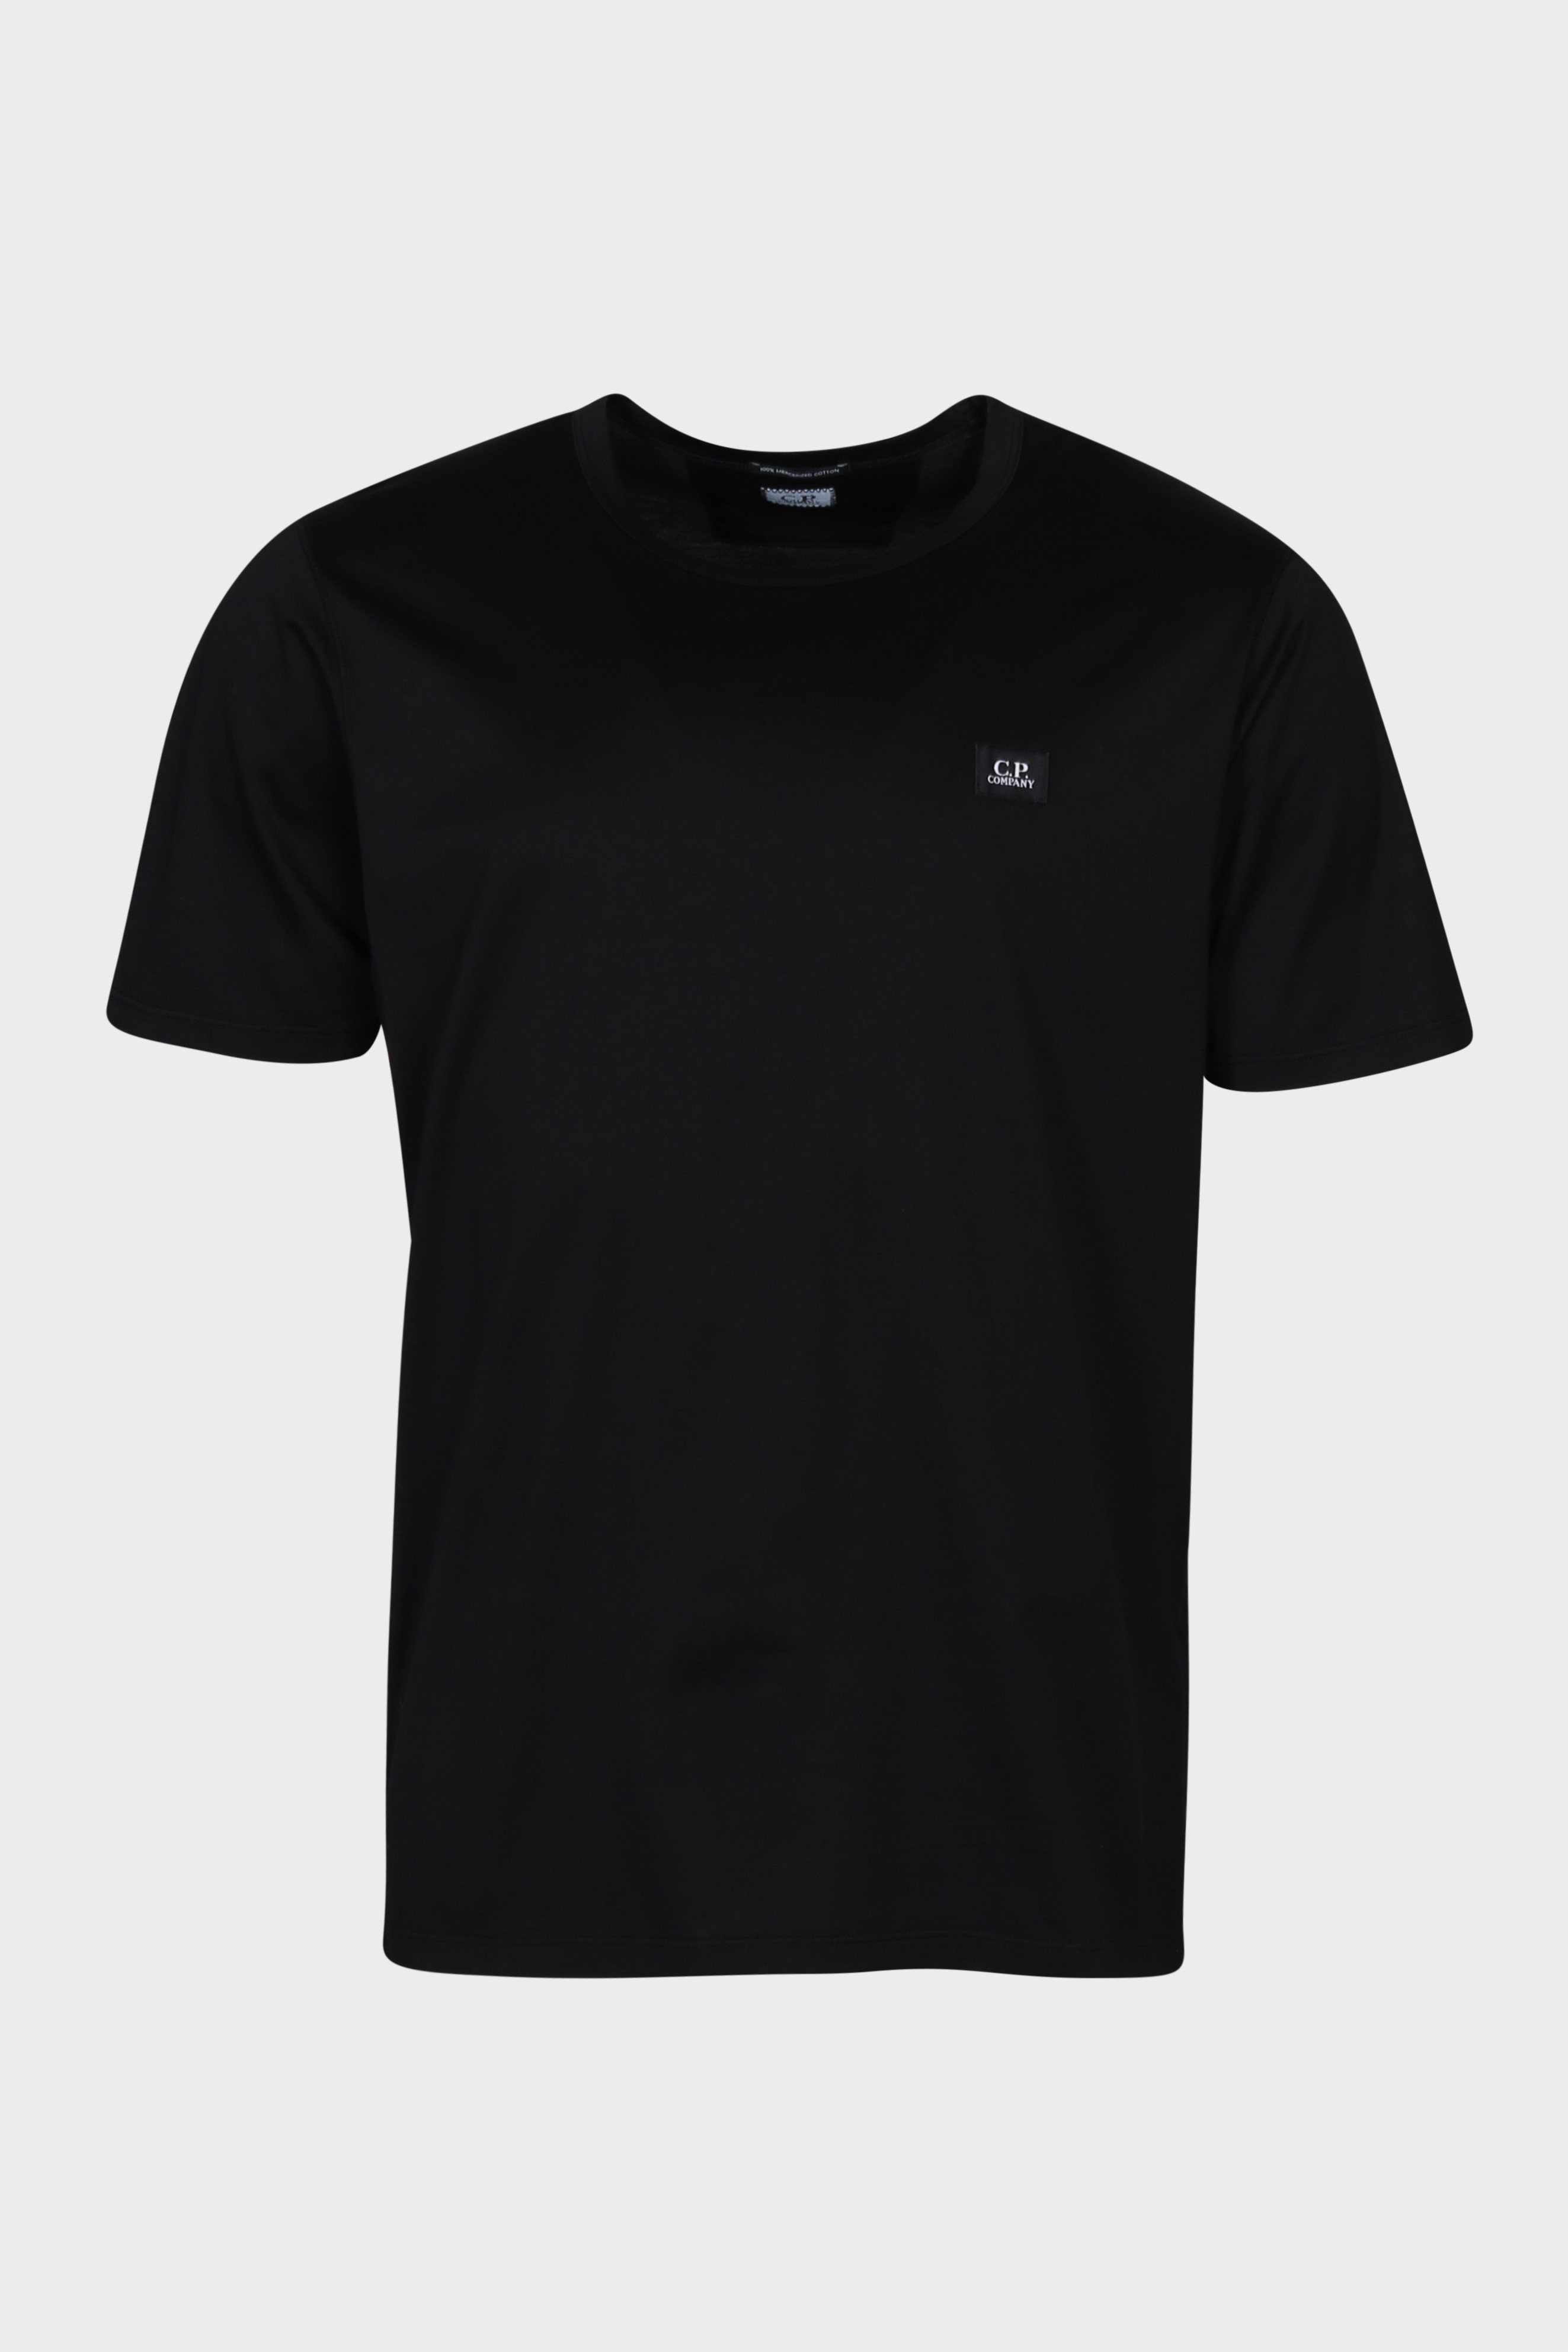 C.P. COMPANY T-Shirt in Black